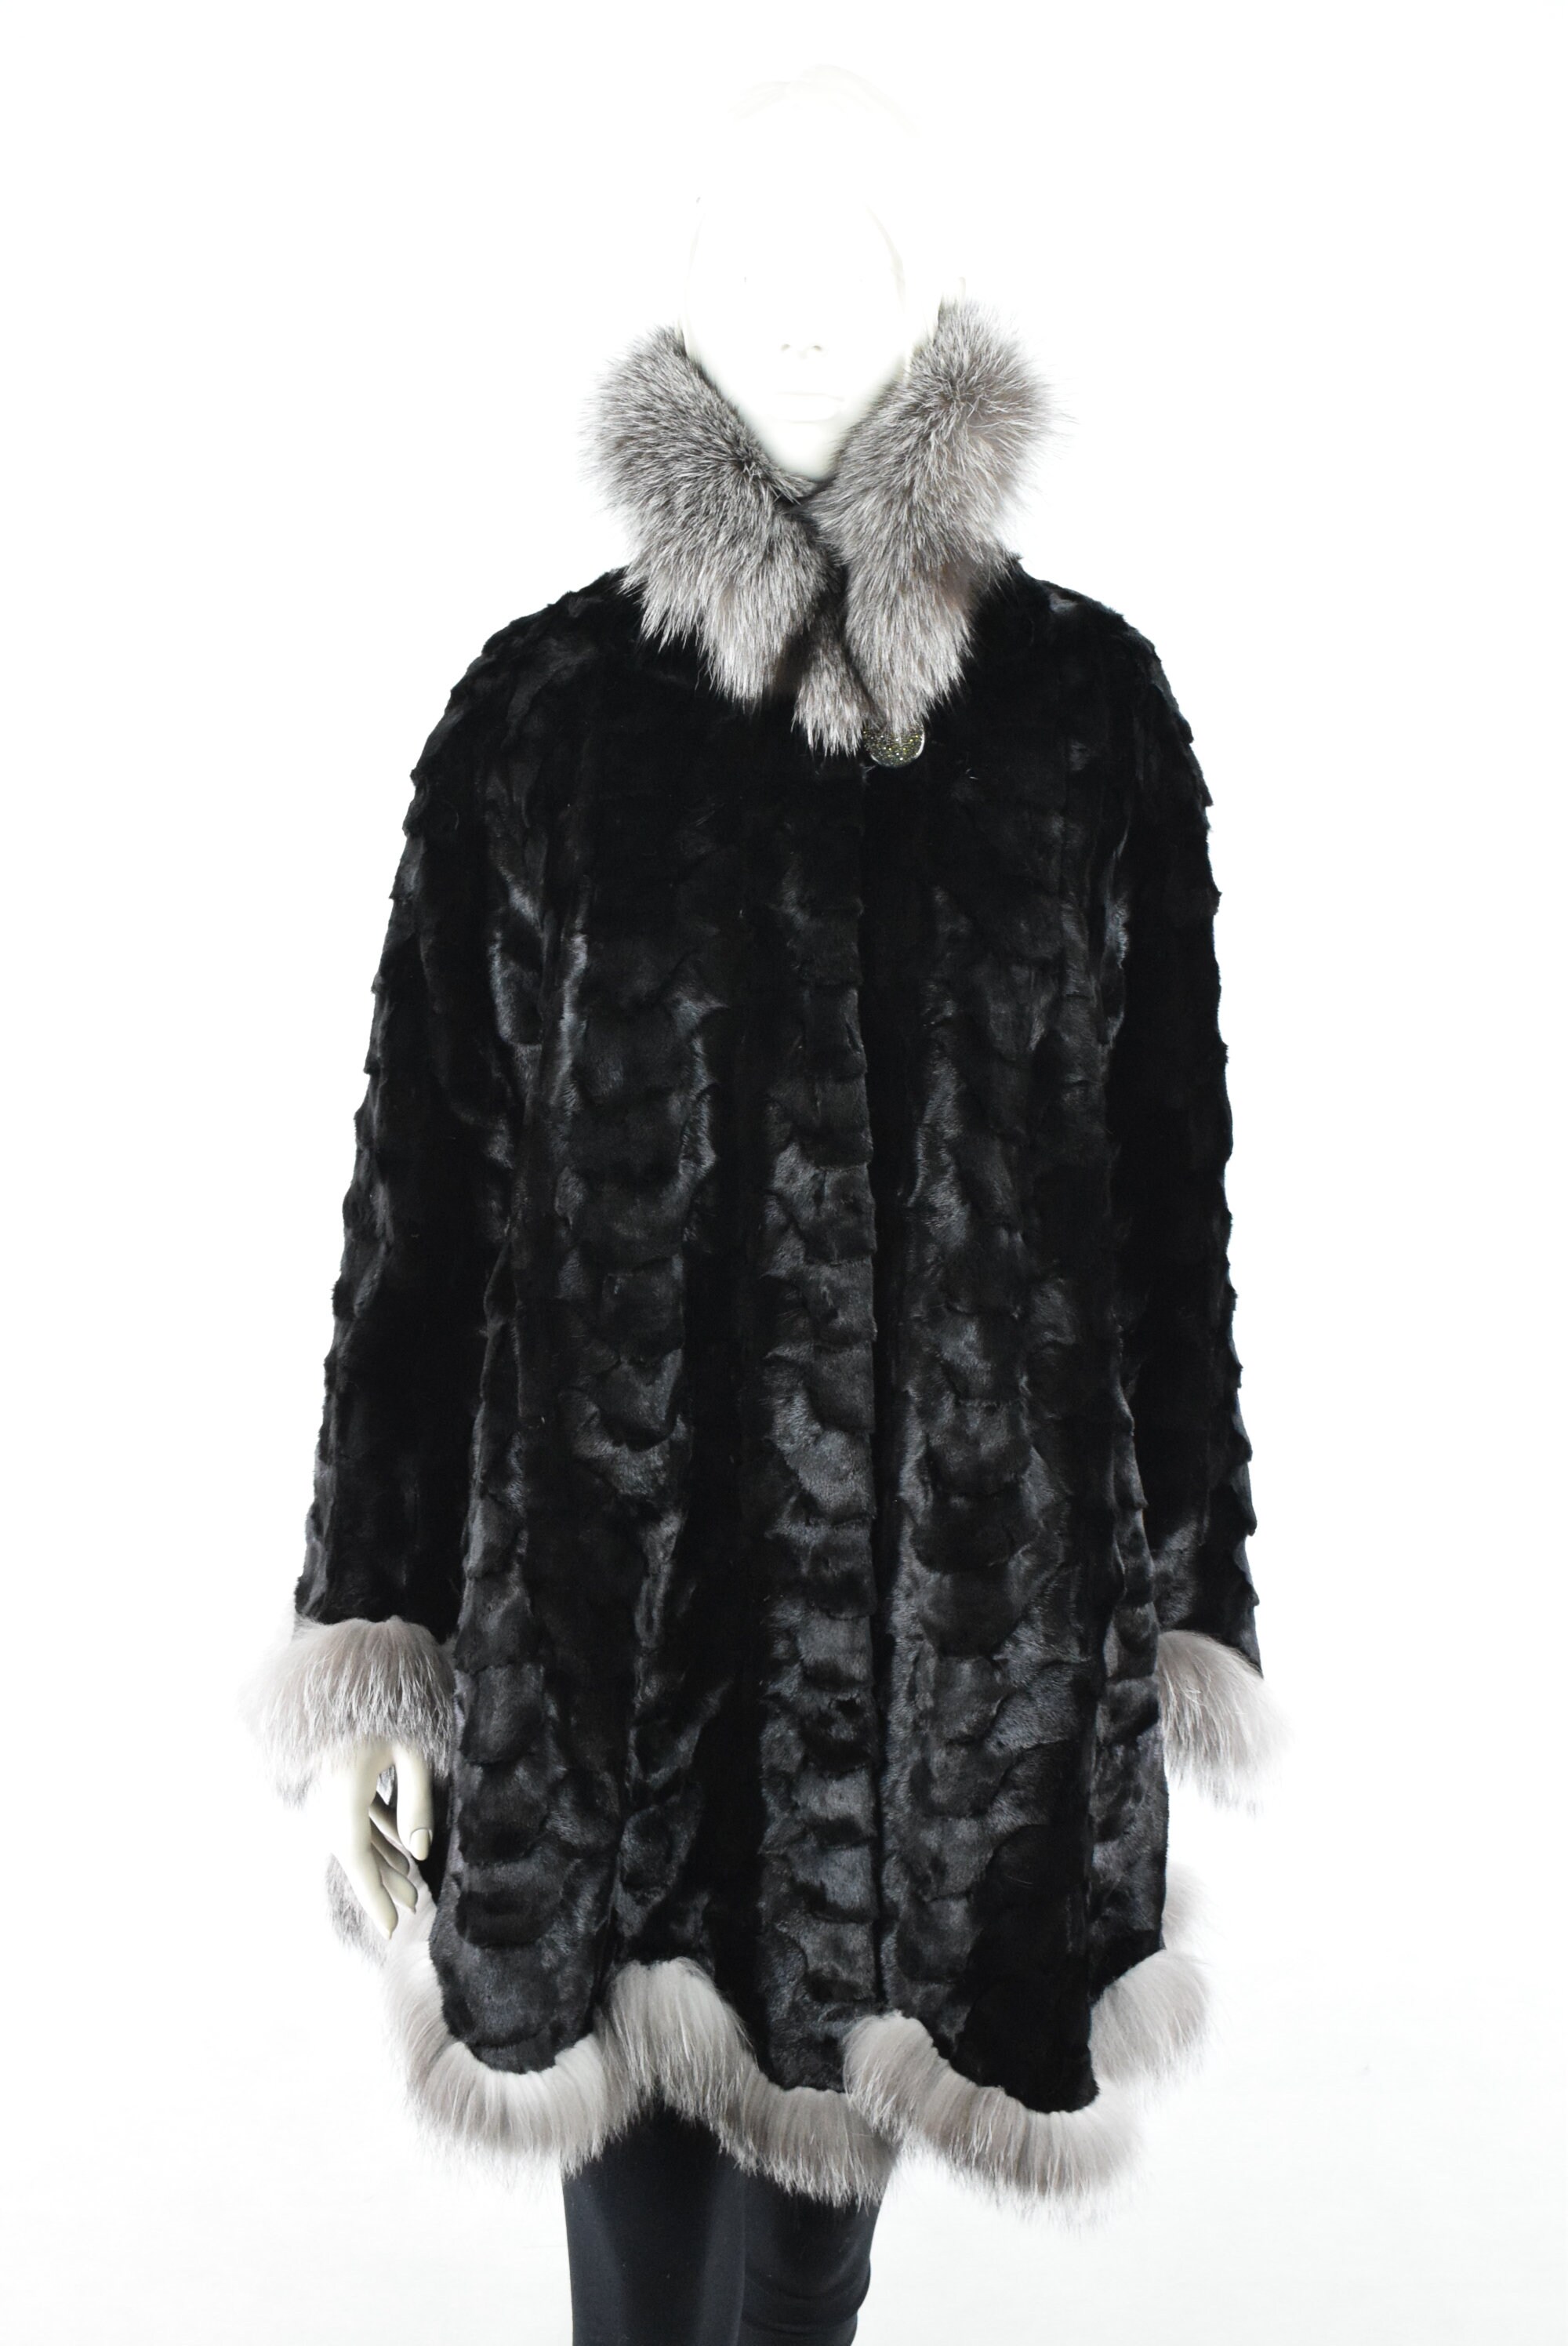 Fur Mink Coat Plus Size Black Color With Silver Fox Collar | Etsy